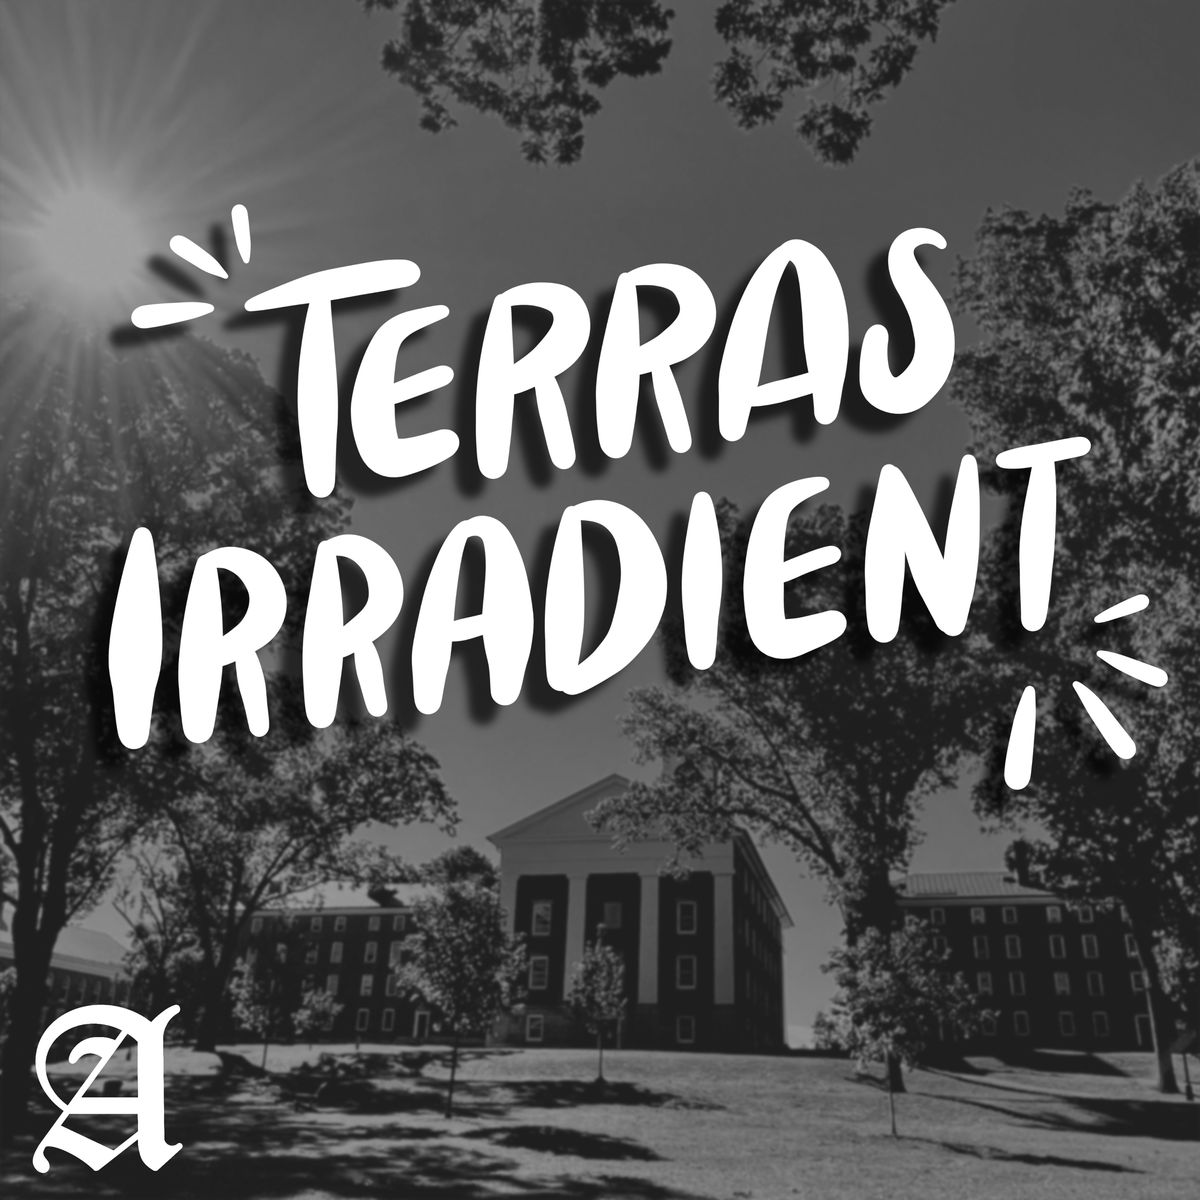 Terras Irradient: The Athlete/Non-Athlete Divide